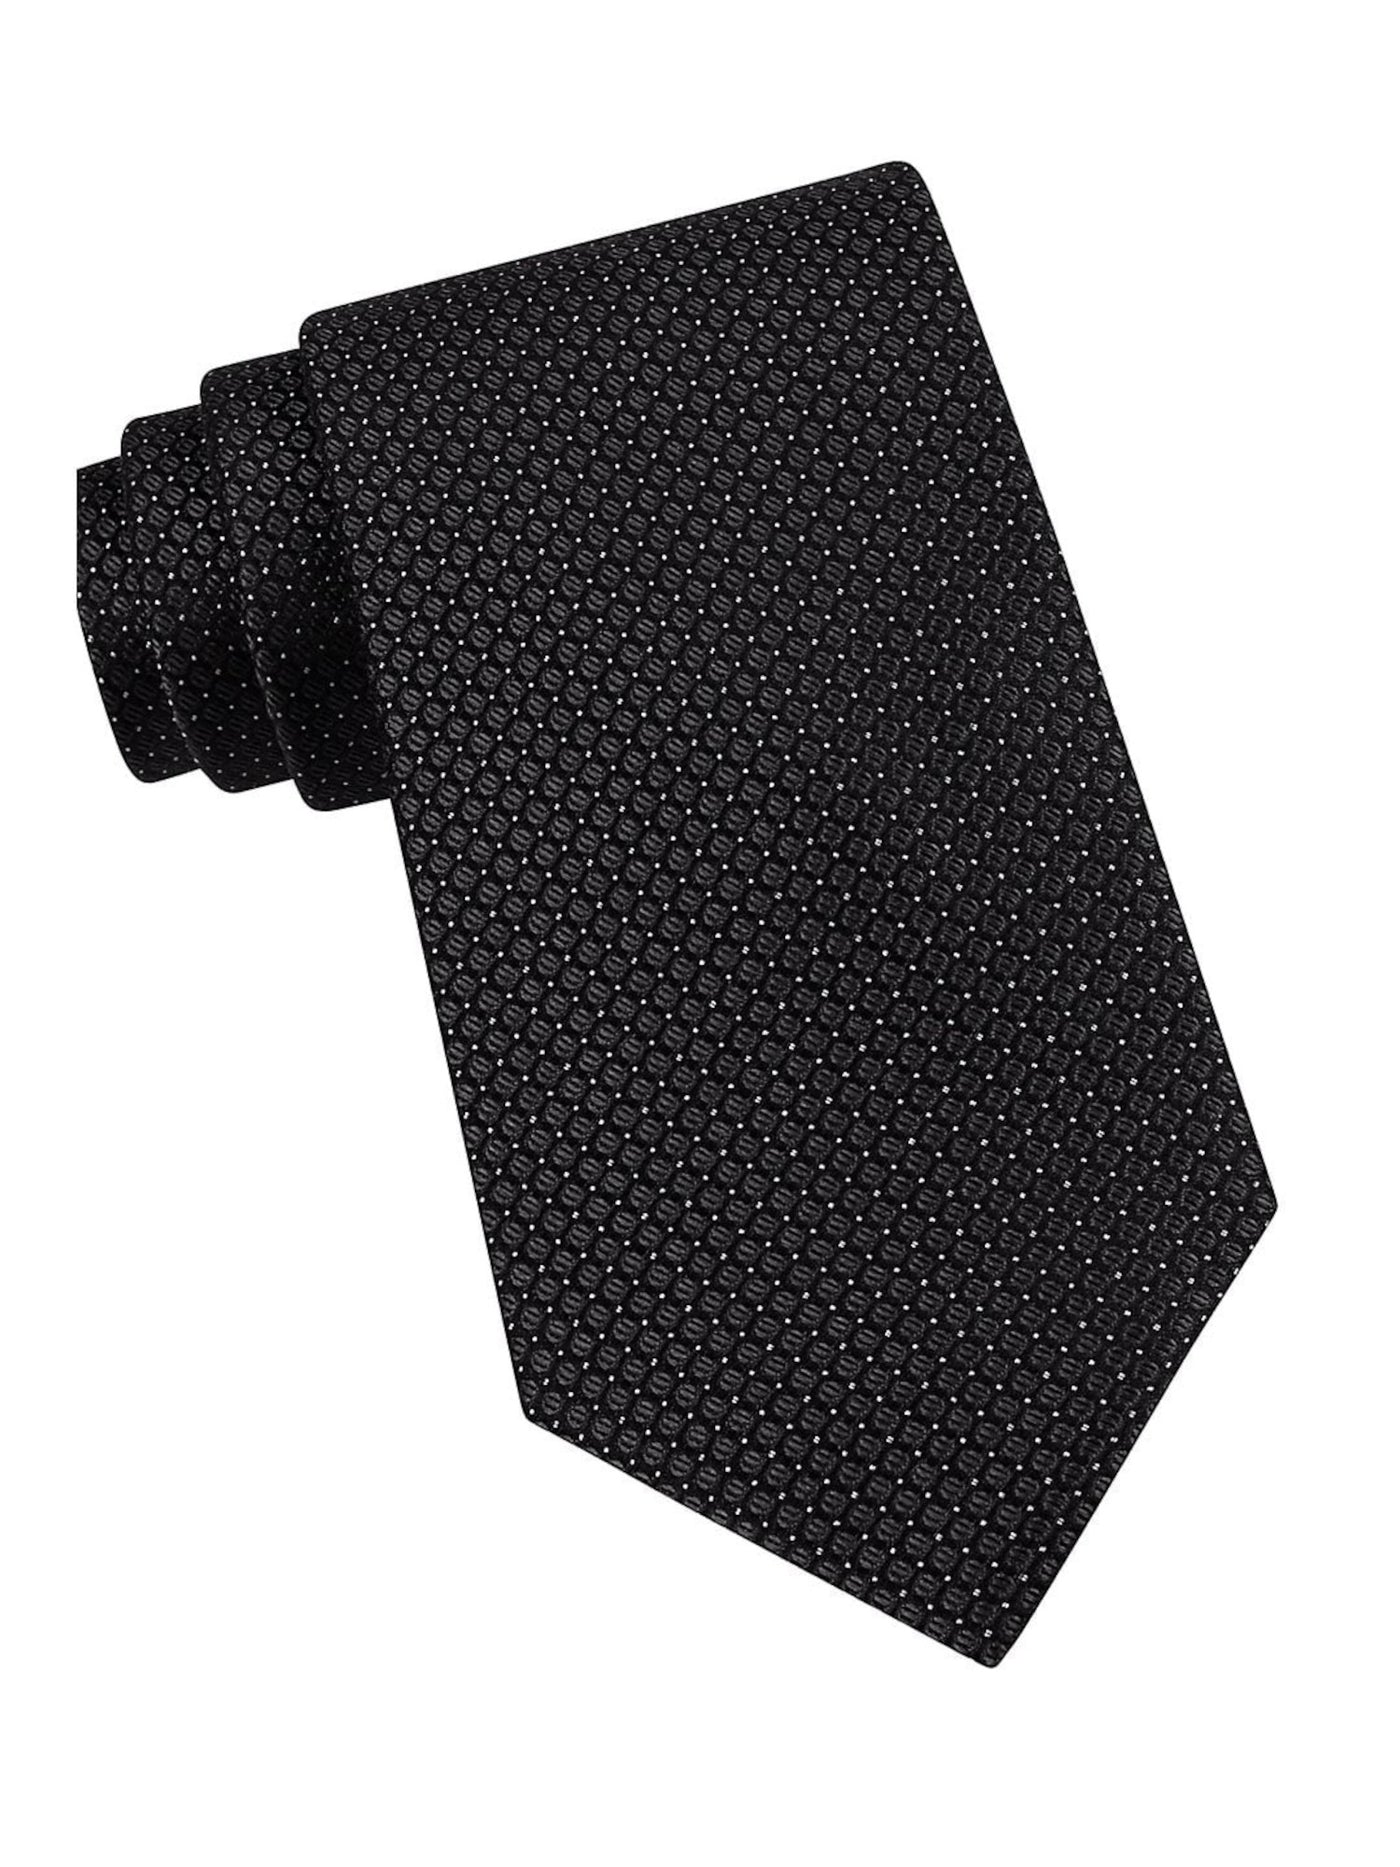 CALVIN KLEIN Mens Black Micro Check Textured Slim Neck Tie